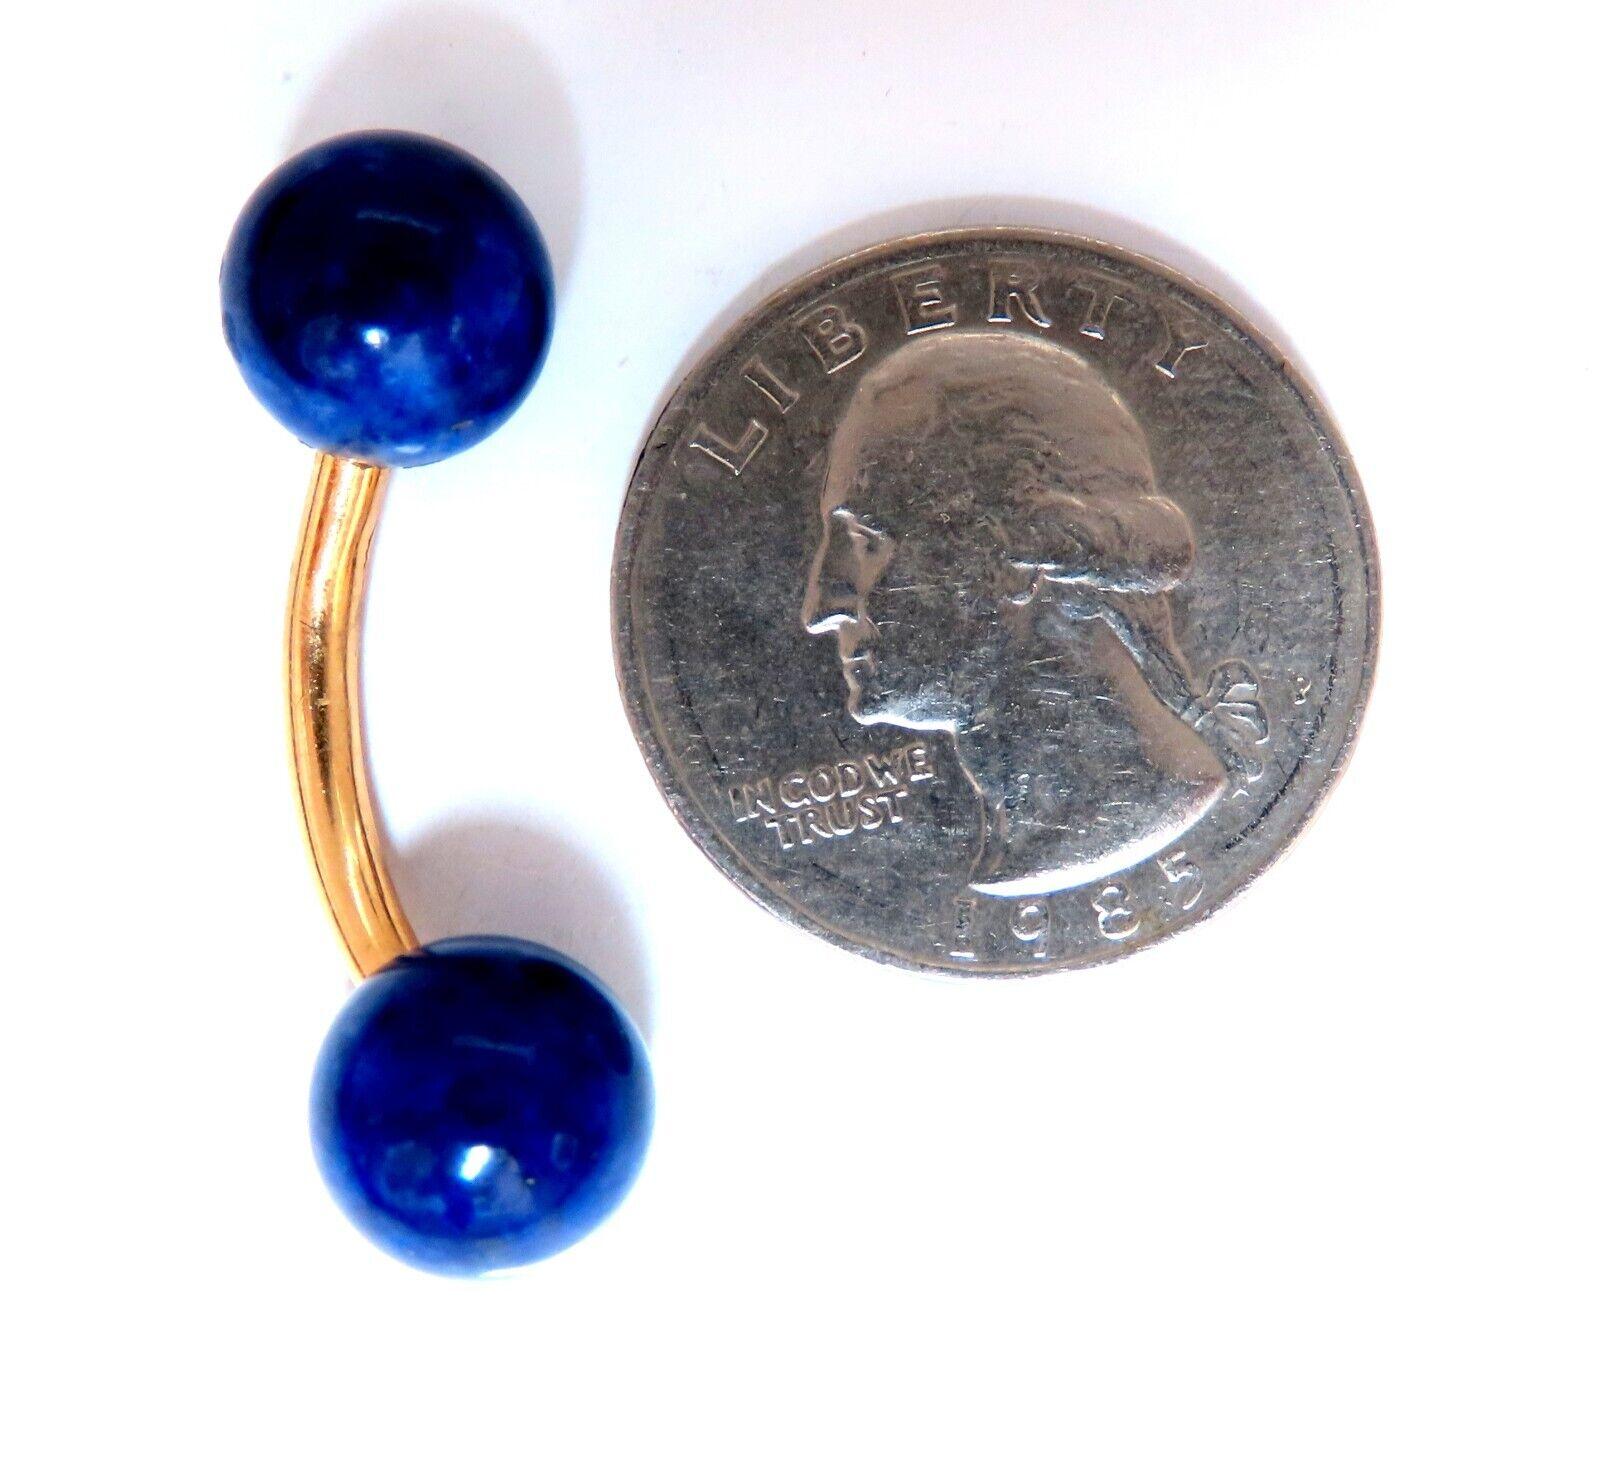 boutons de manchette en lapis-lazuli naturel 10 mm

or jaune 14kt

7.8 grammes